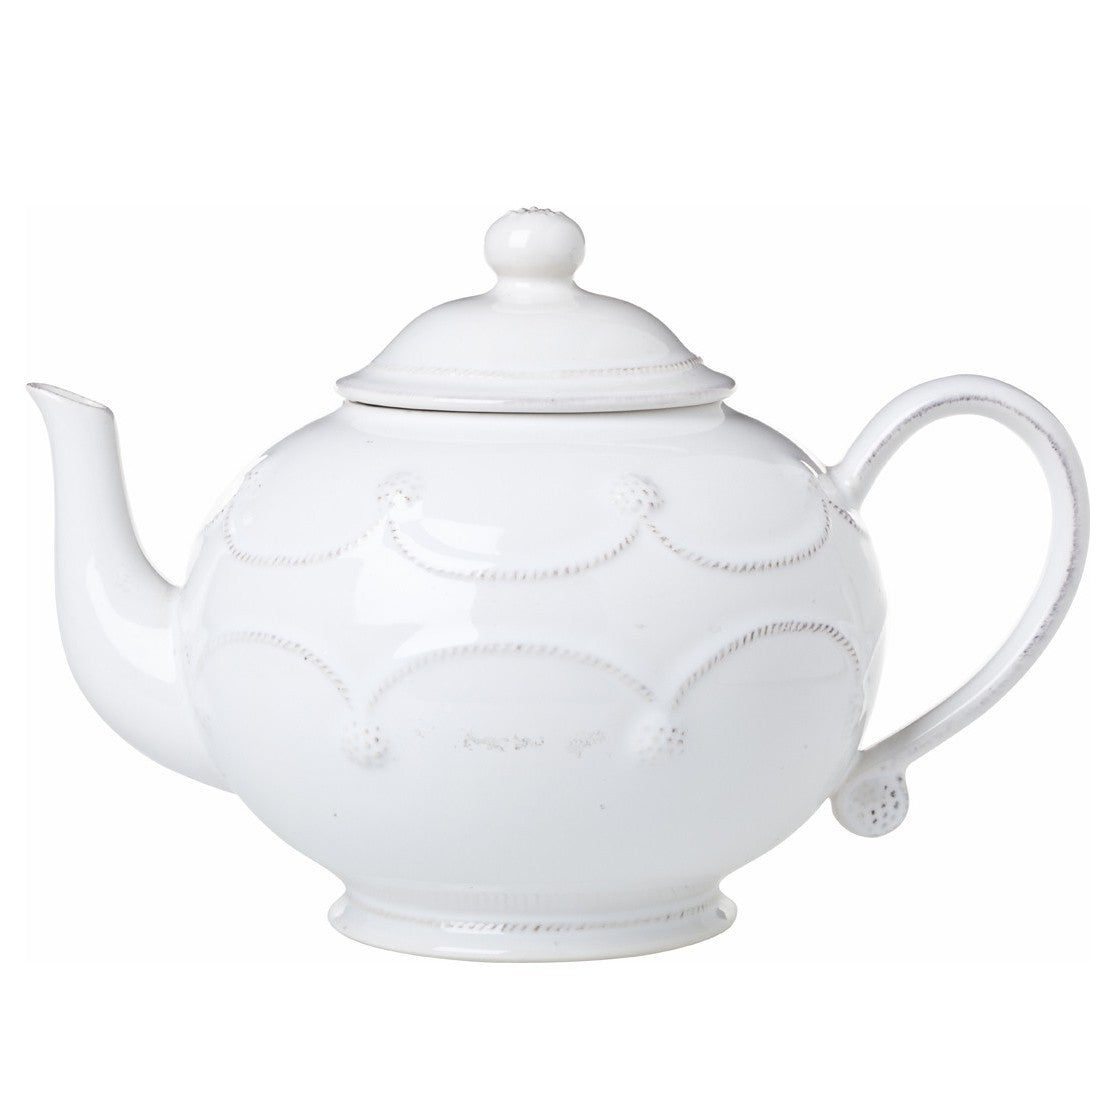 JULISKA: Berry & Thread Whitewash Teapot - Artistica.com